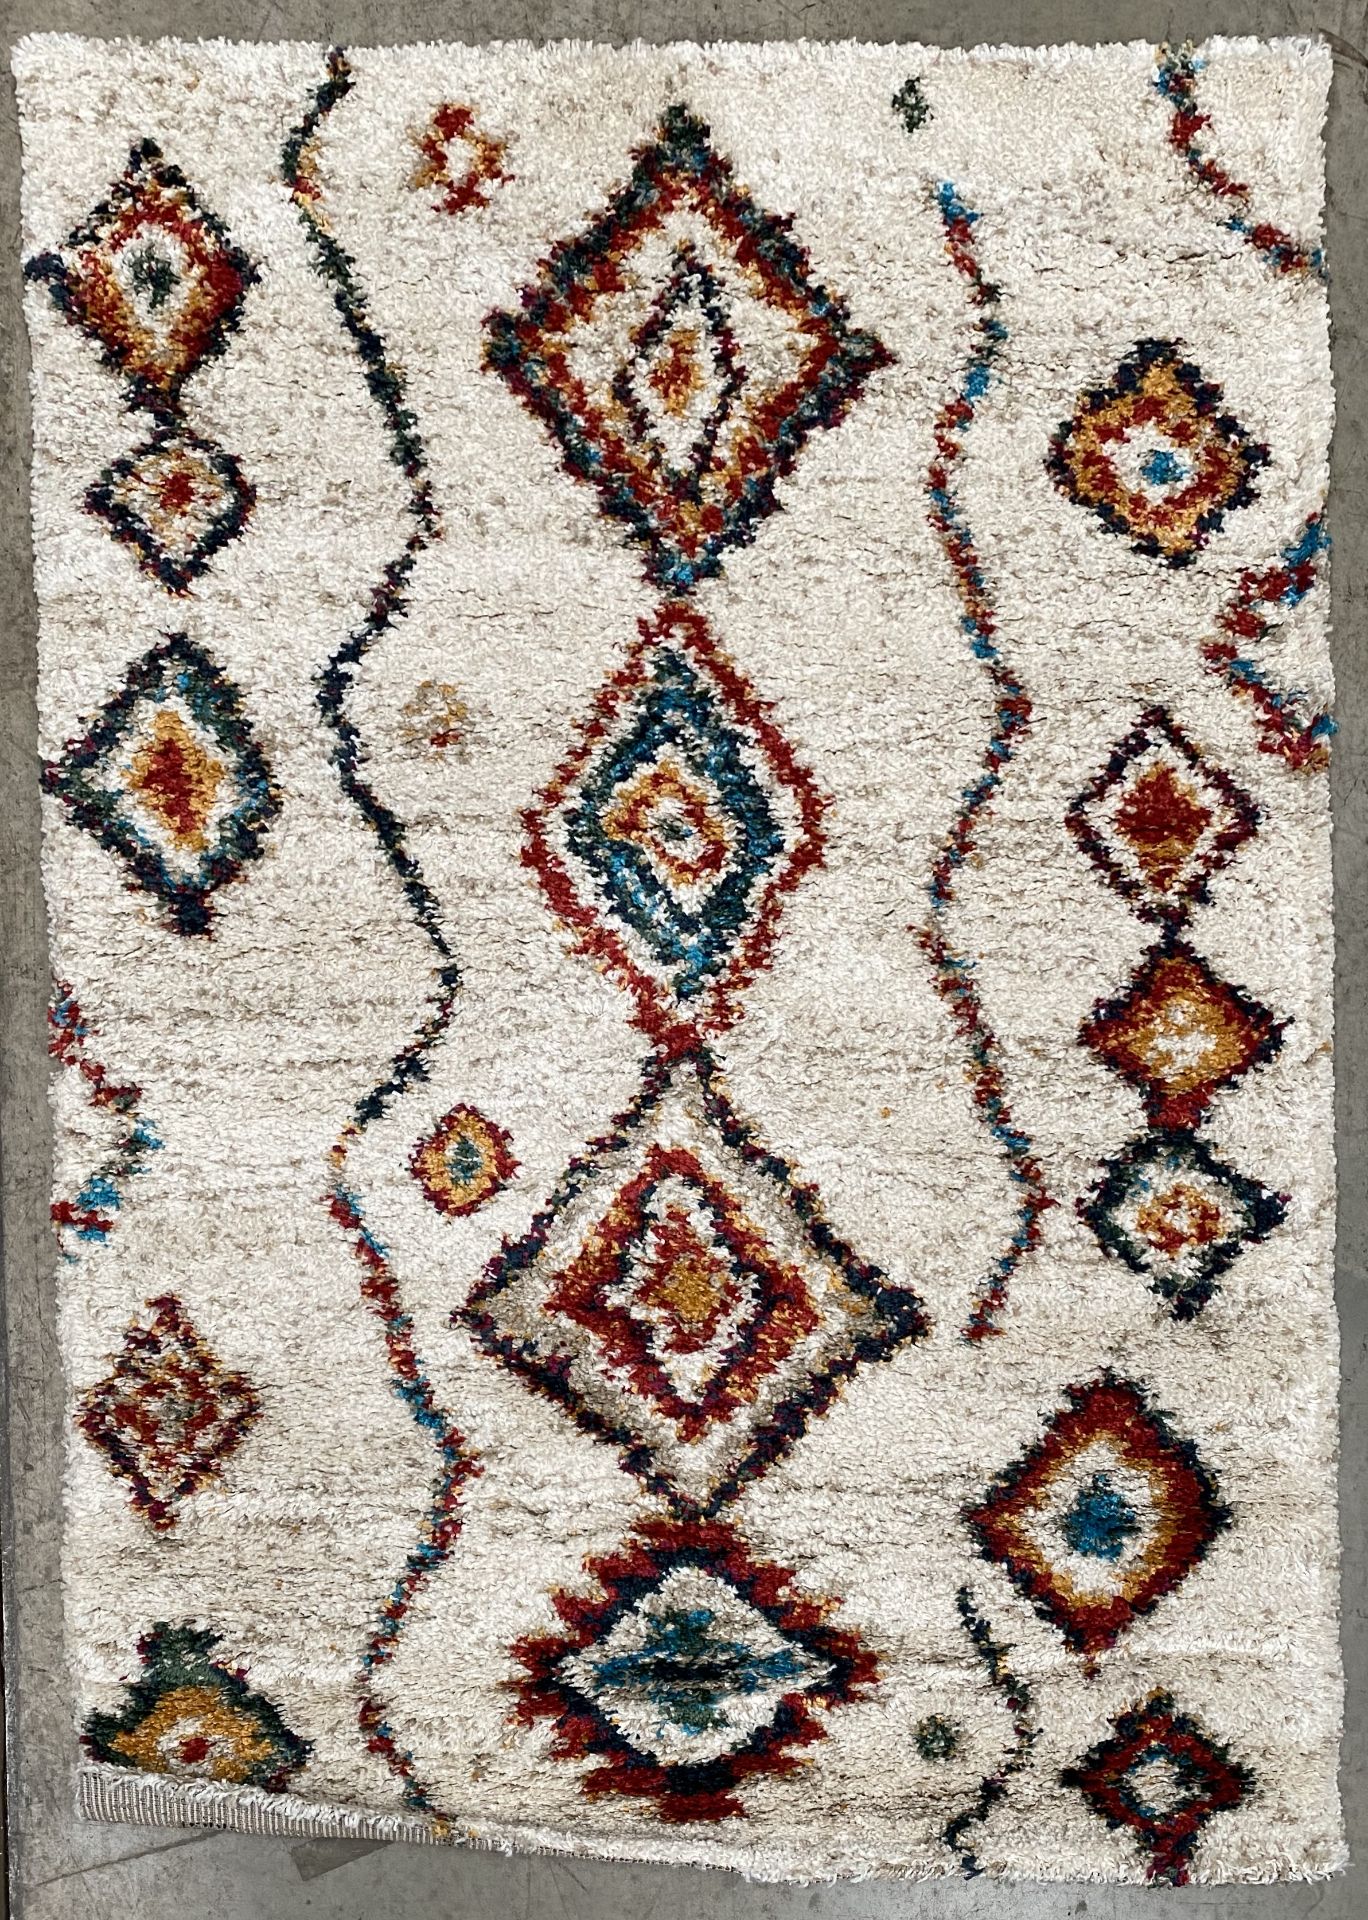 A diamond patterned multicoloured cream rug - 170cm x 120cm